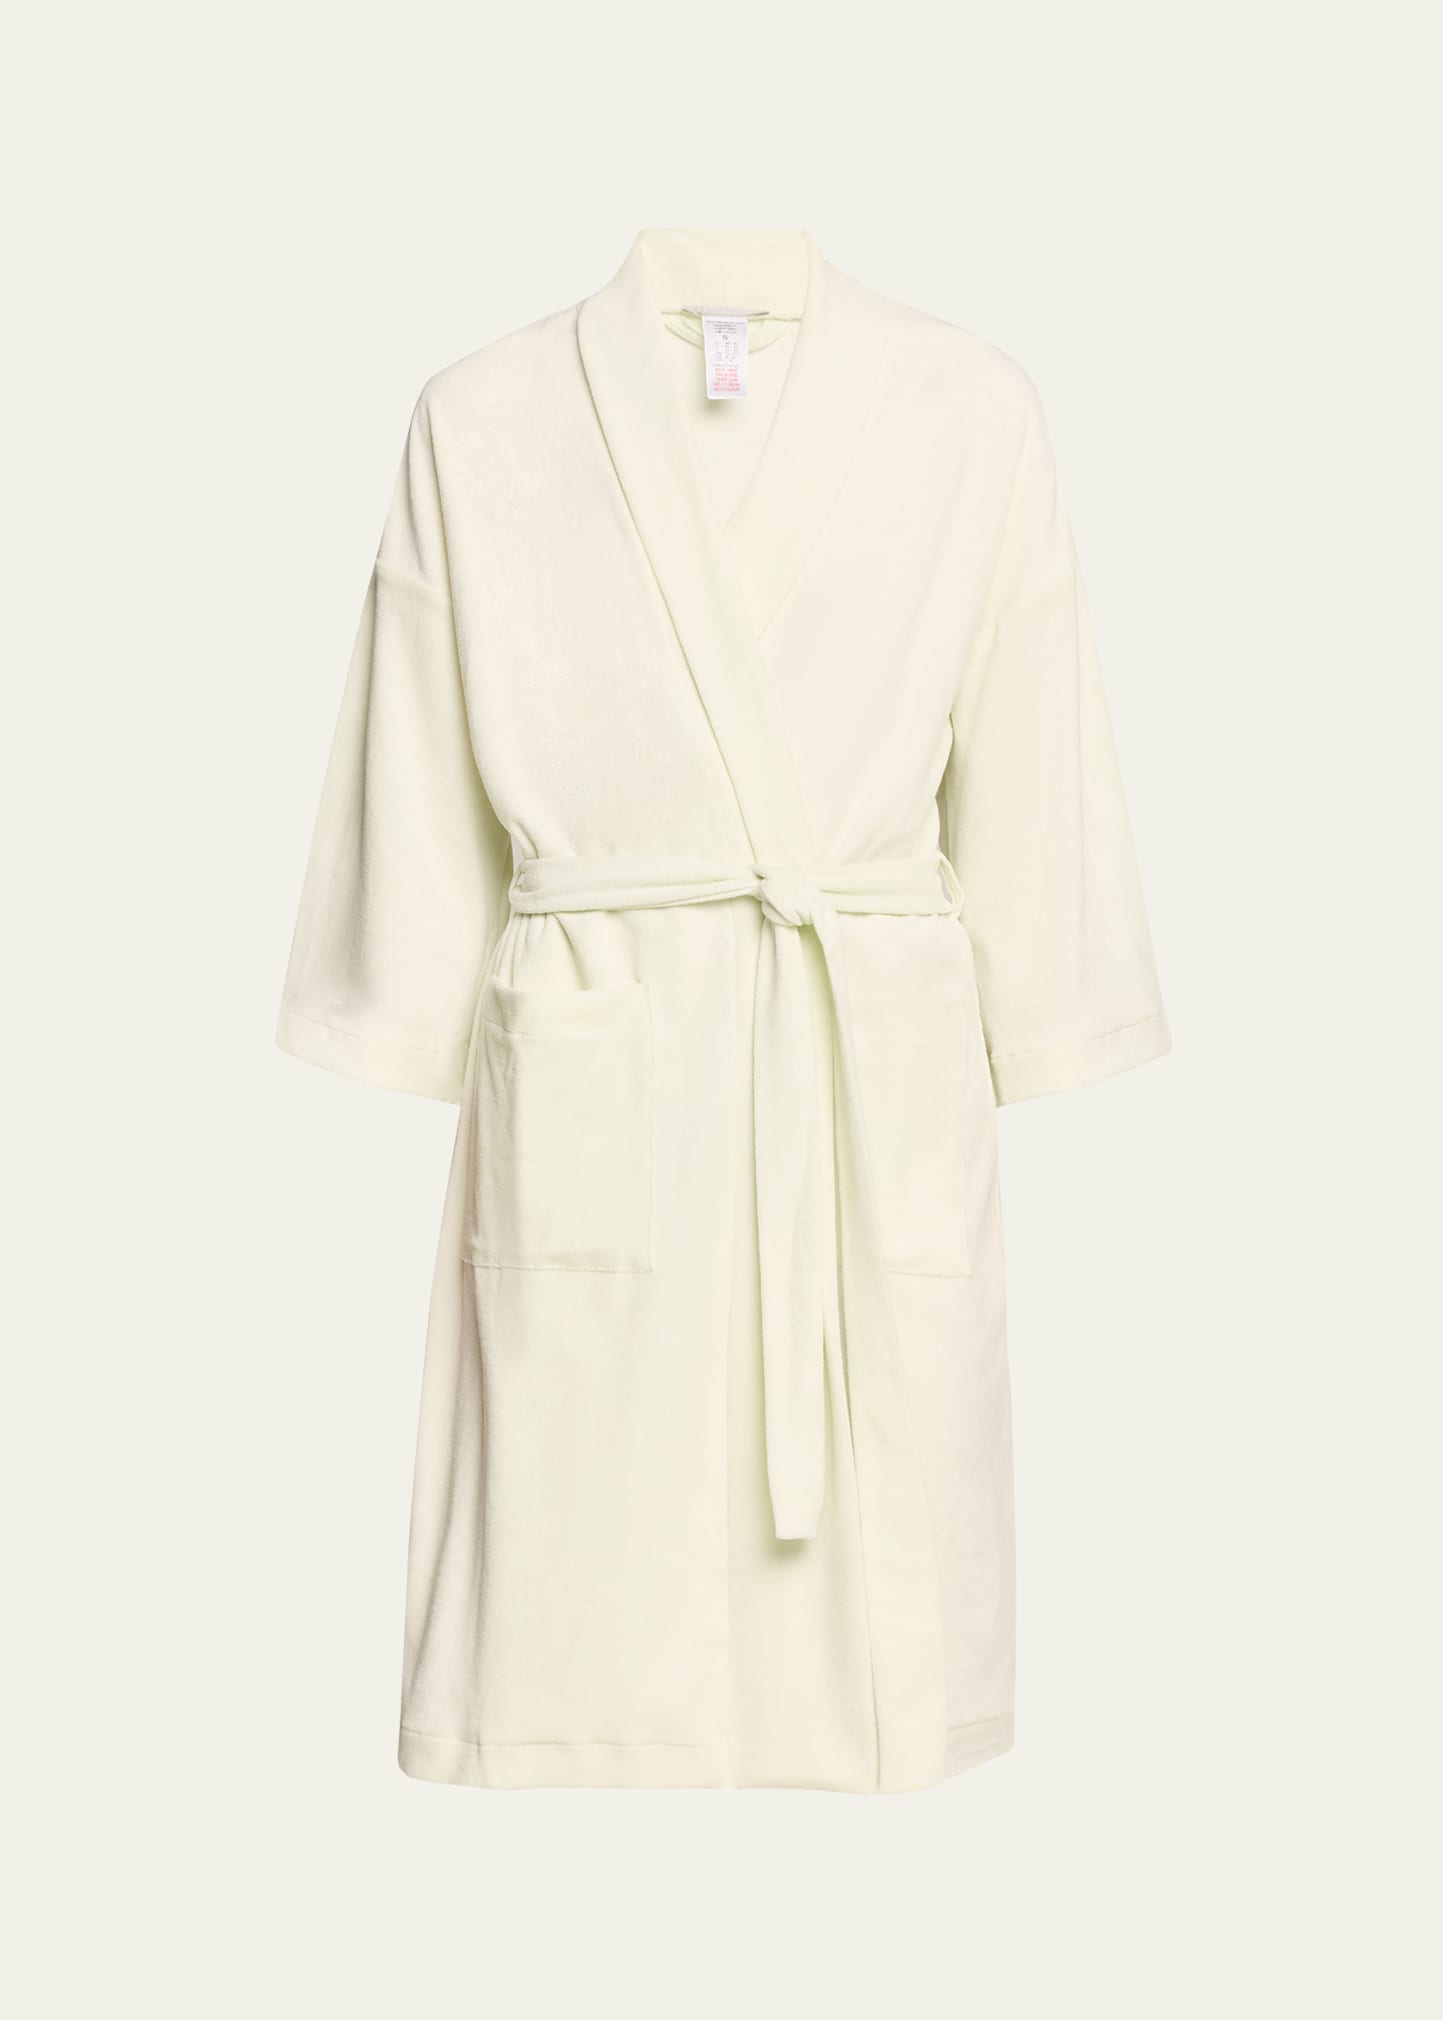 3/4-Sleeve Cotton Robe